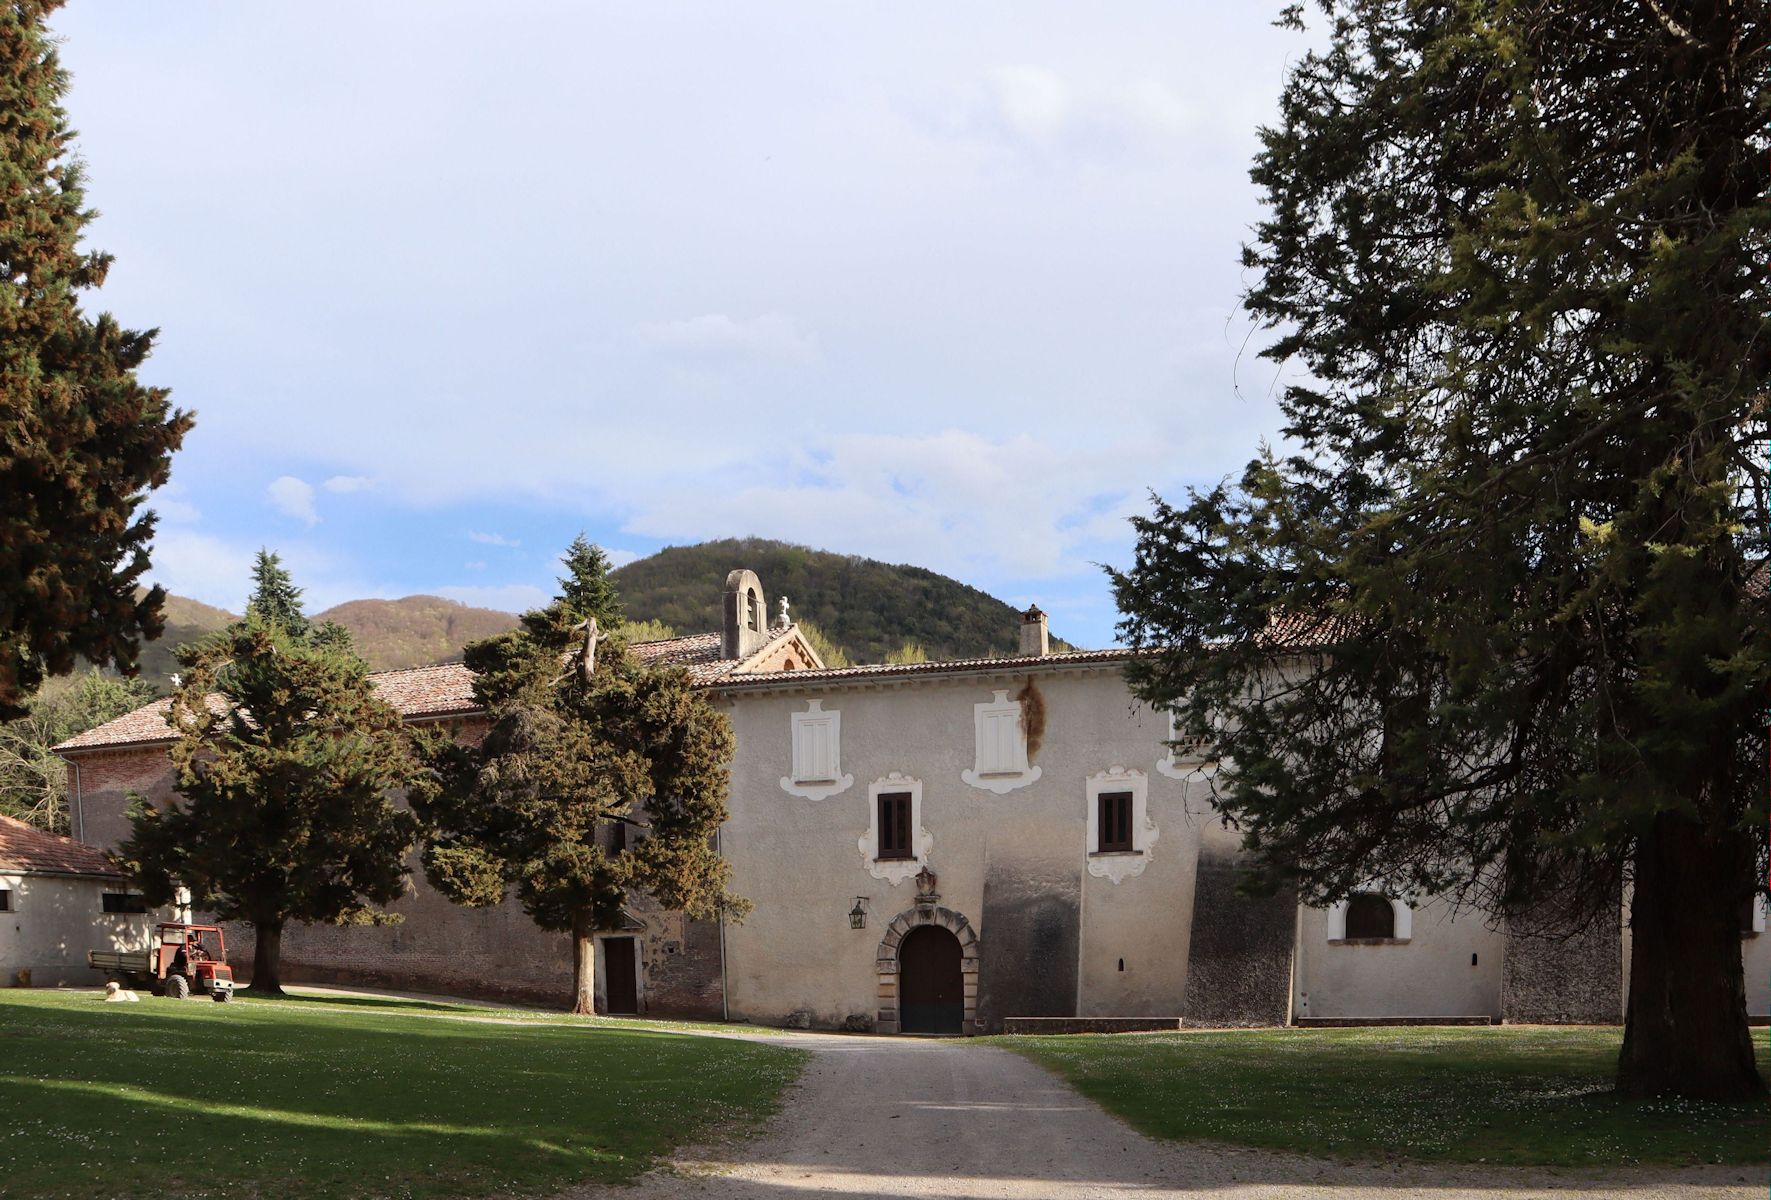 ehemaliges Kloster Santa Maria di Cadossa nahe Montesano sulla Marcellana